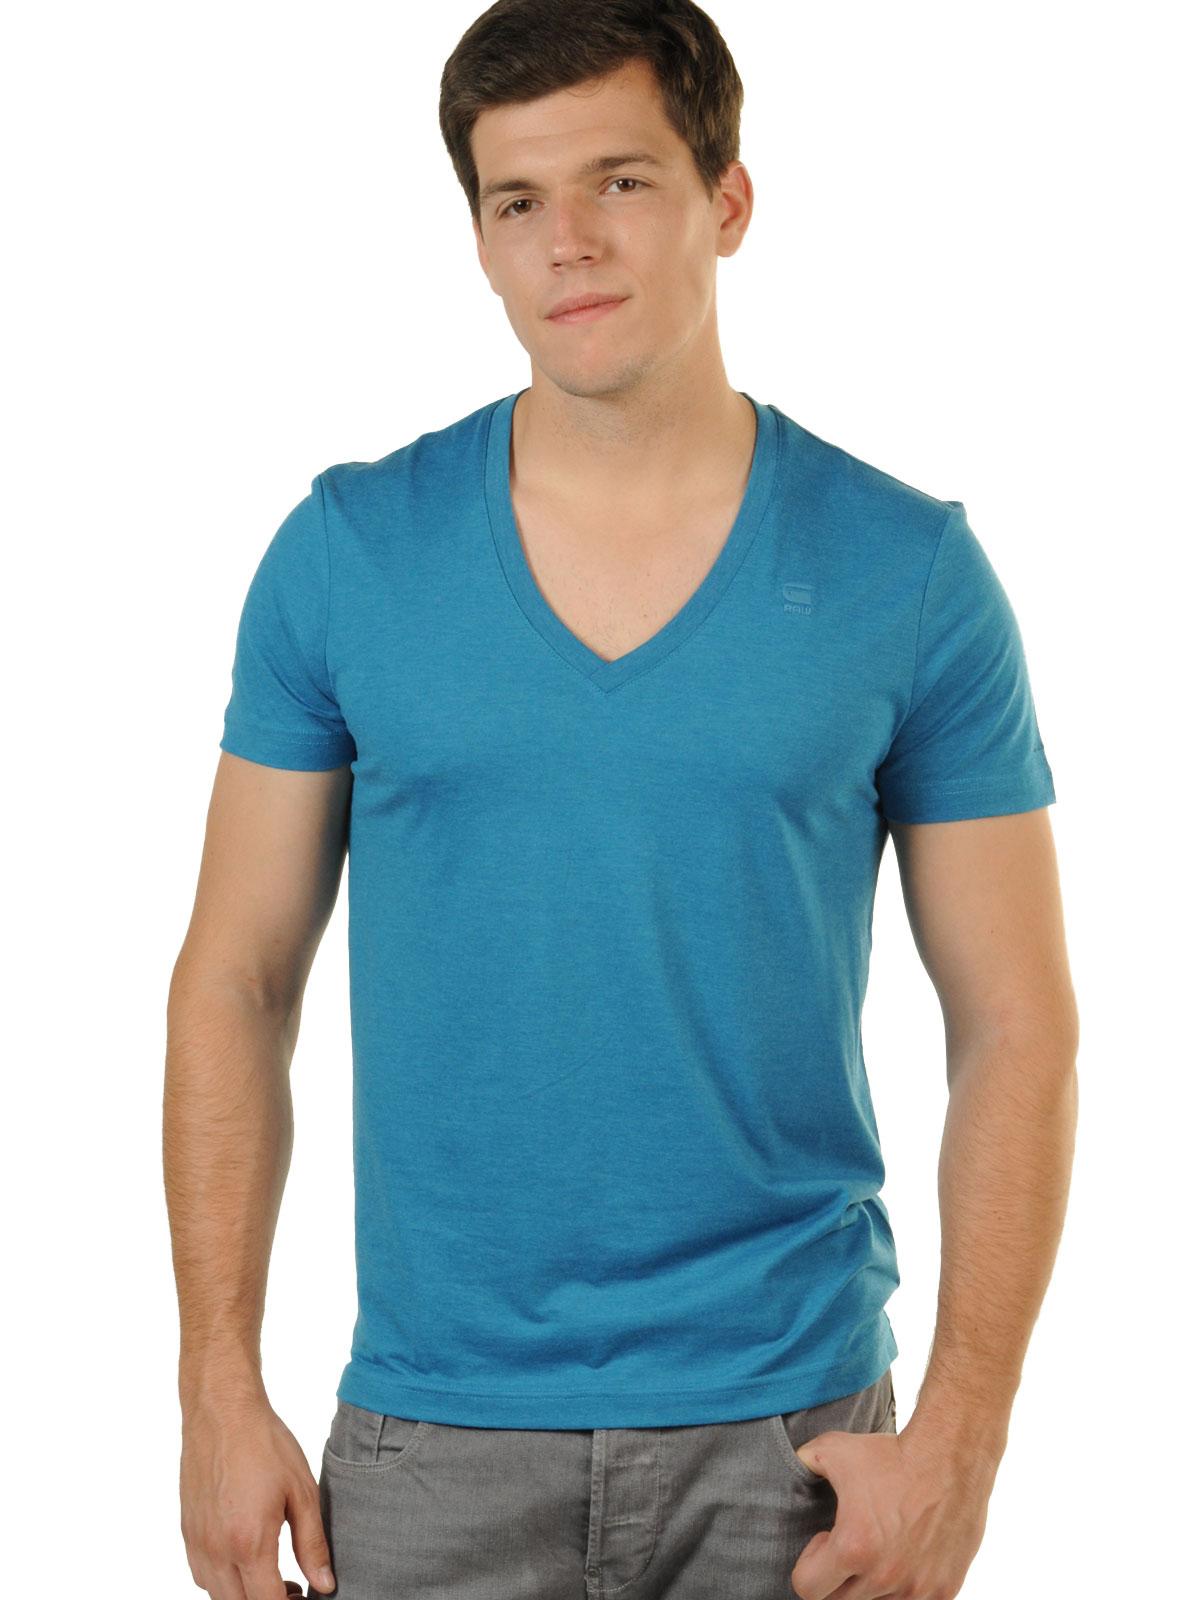 Foto G-Star Lote 2 camisetas V hombre teal azul M